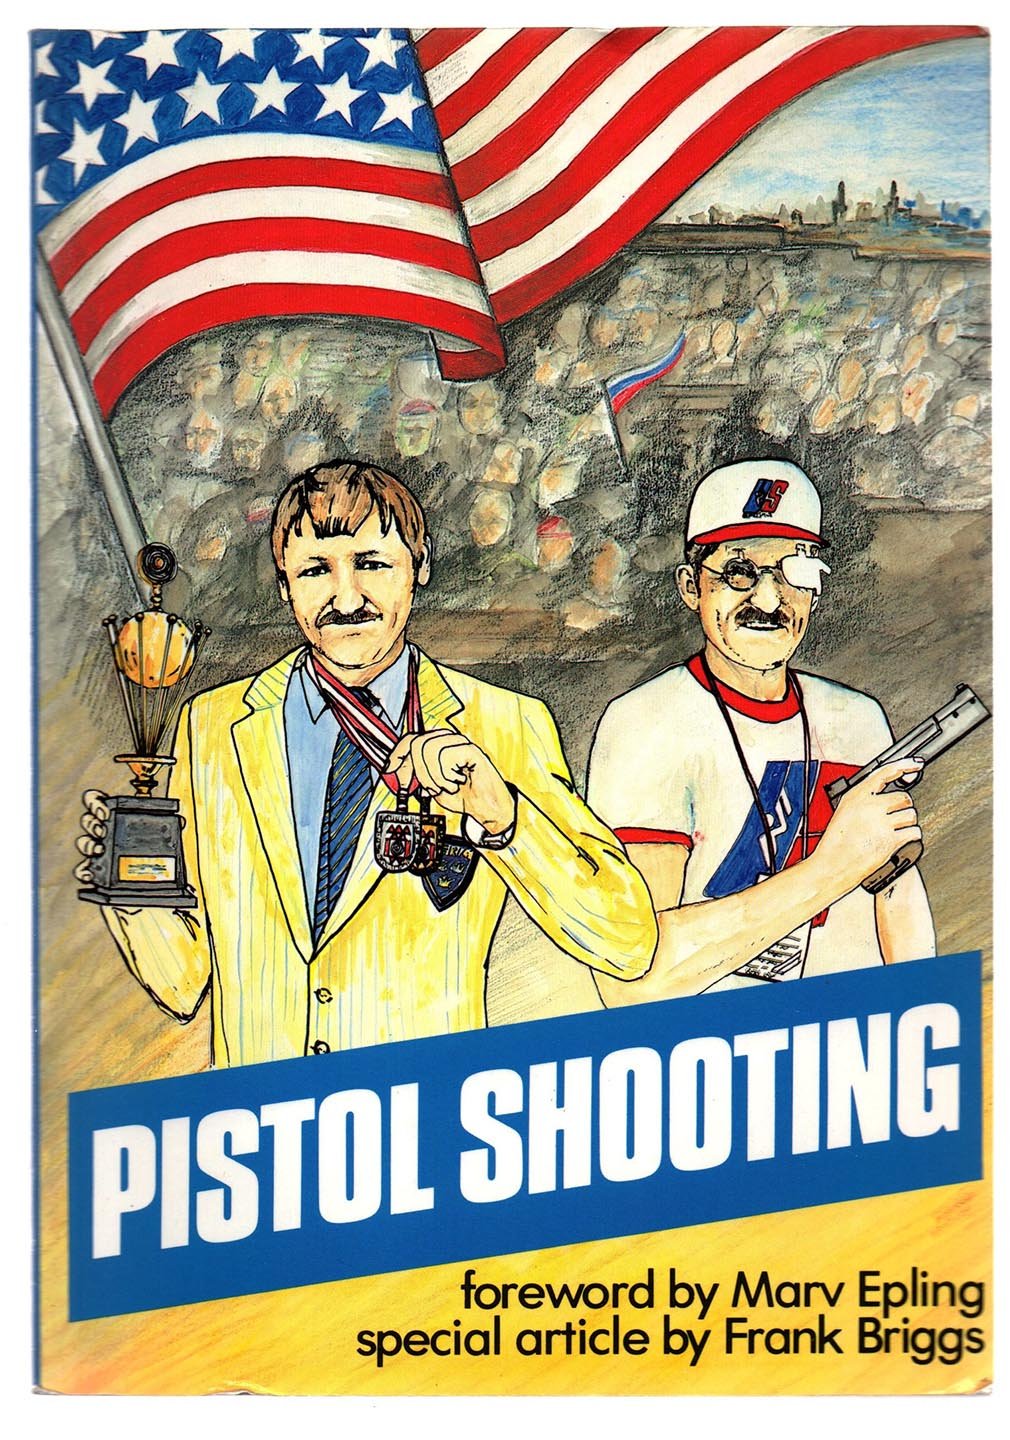 Pistol Shooting